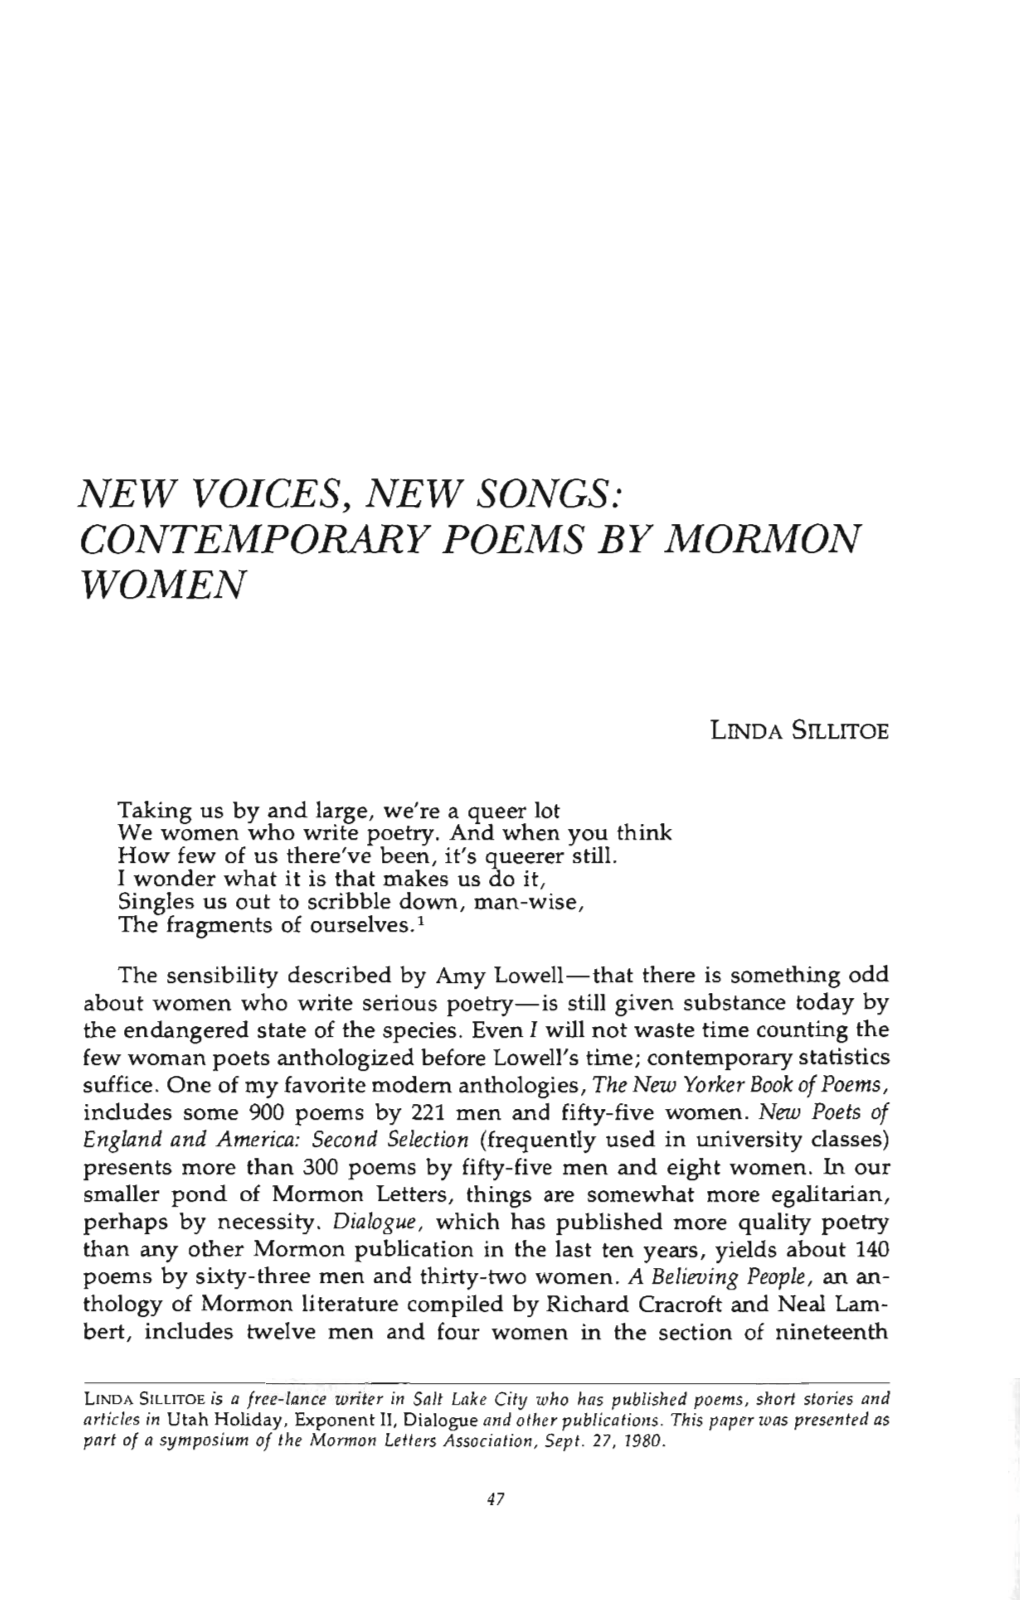 Contemporary Poems by Mormon Women